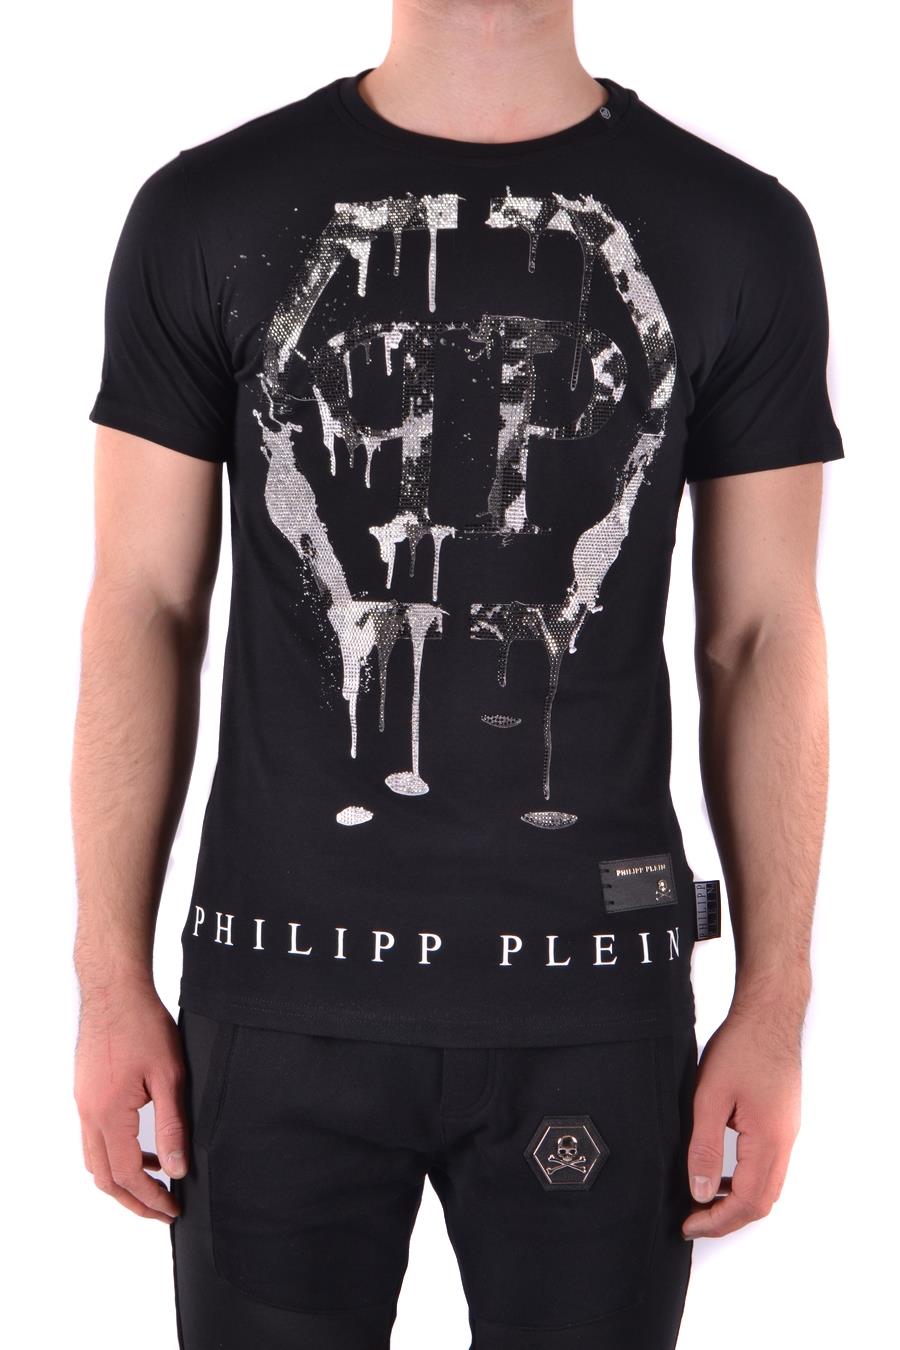 philipp plein clothes price